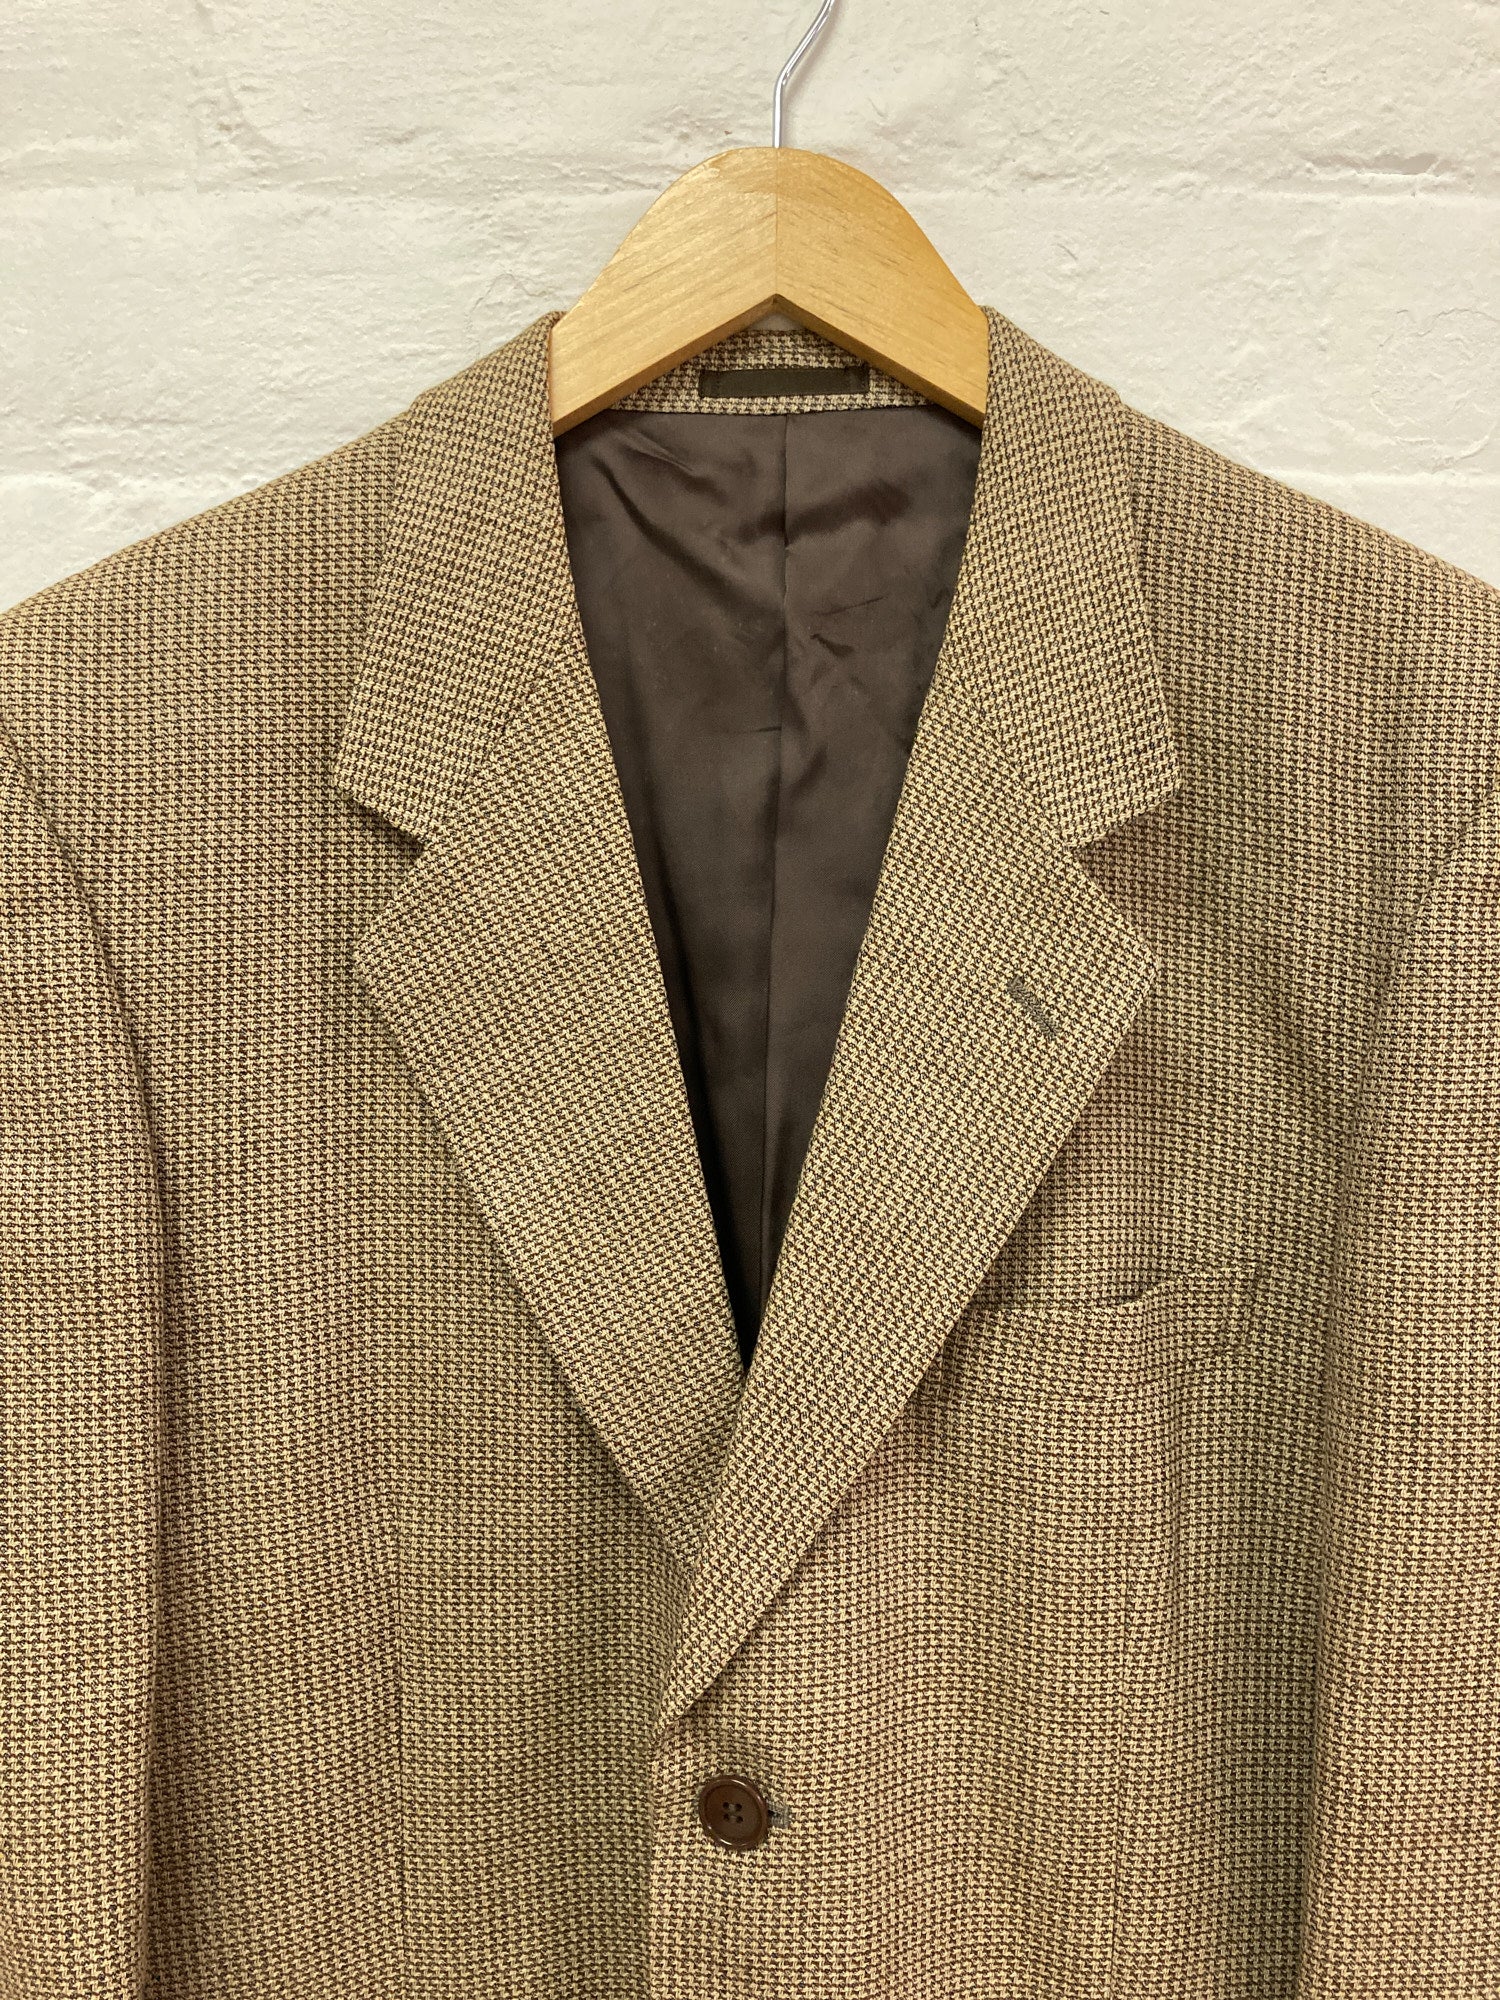 Vintage Yorkshire Tweed by Moon brown wool blend 3 button blazer - M L